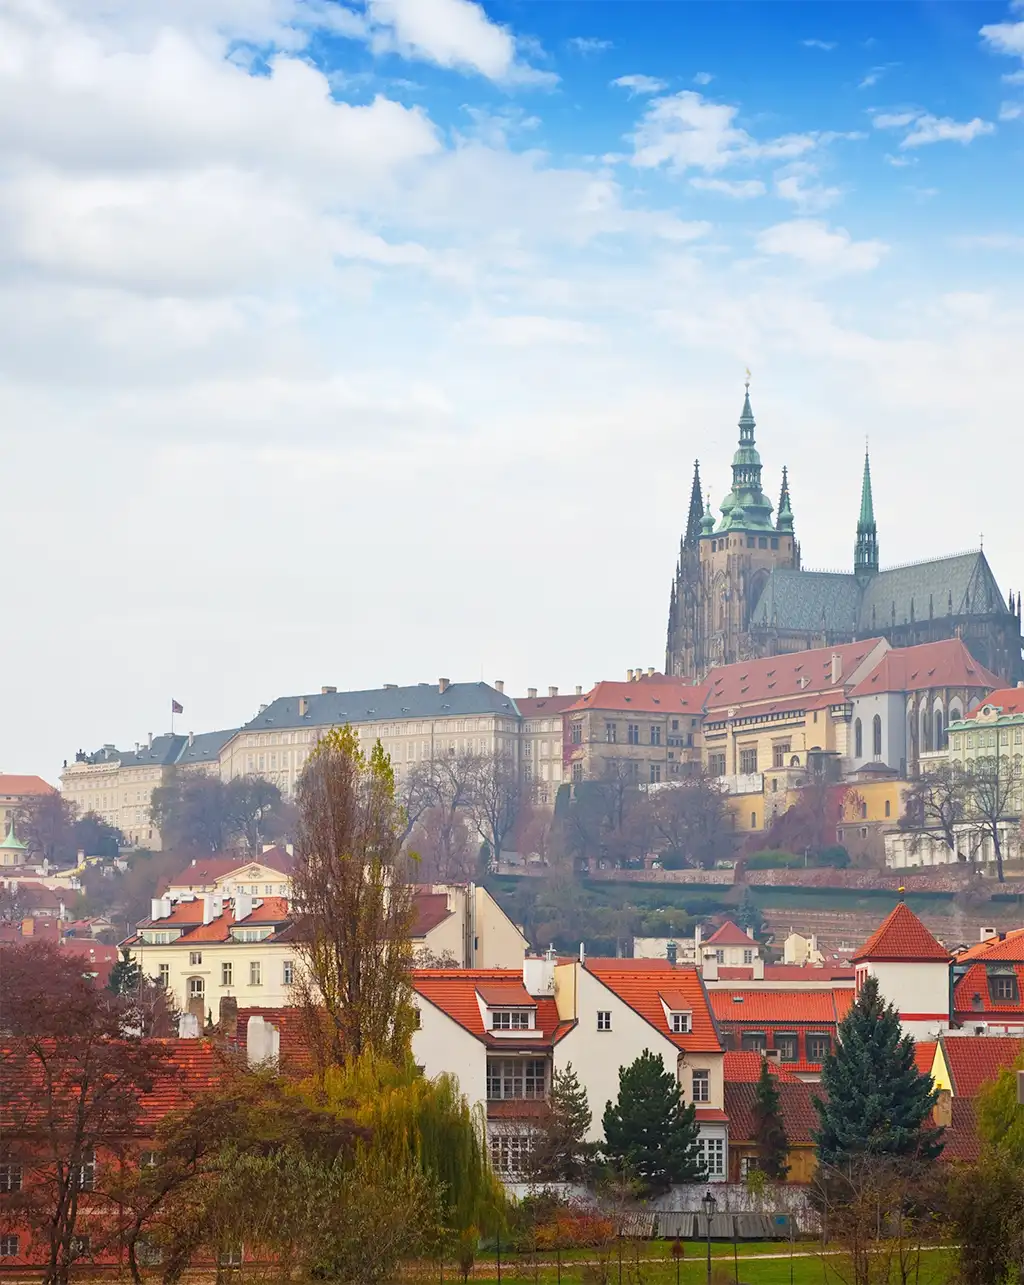 La historia del castillo de Praga